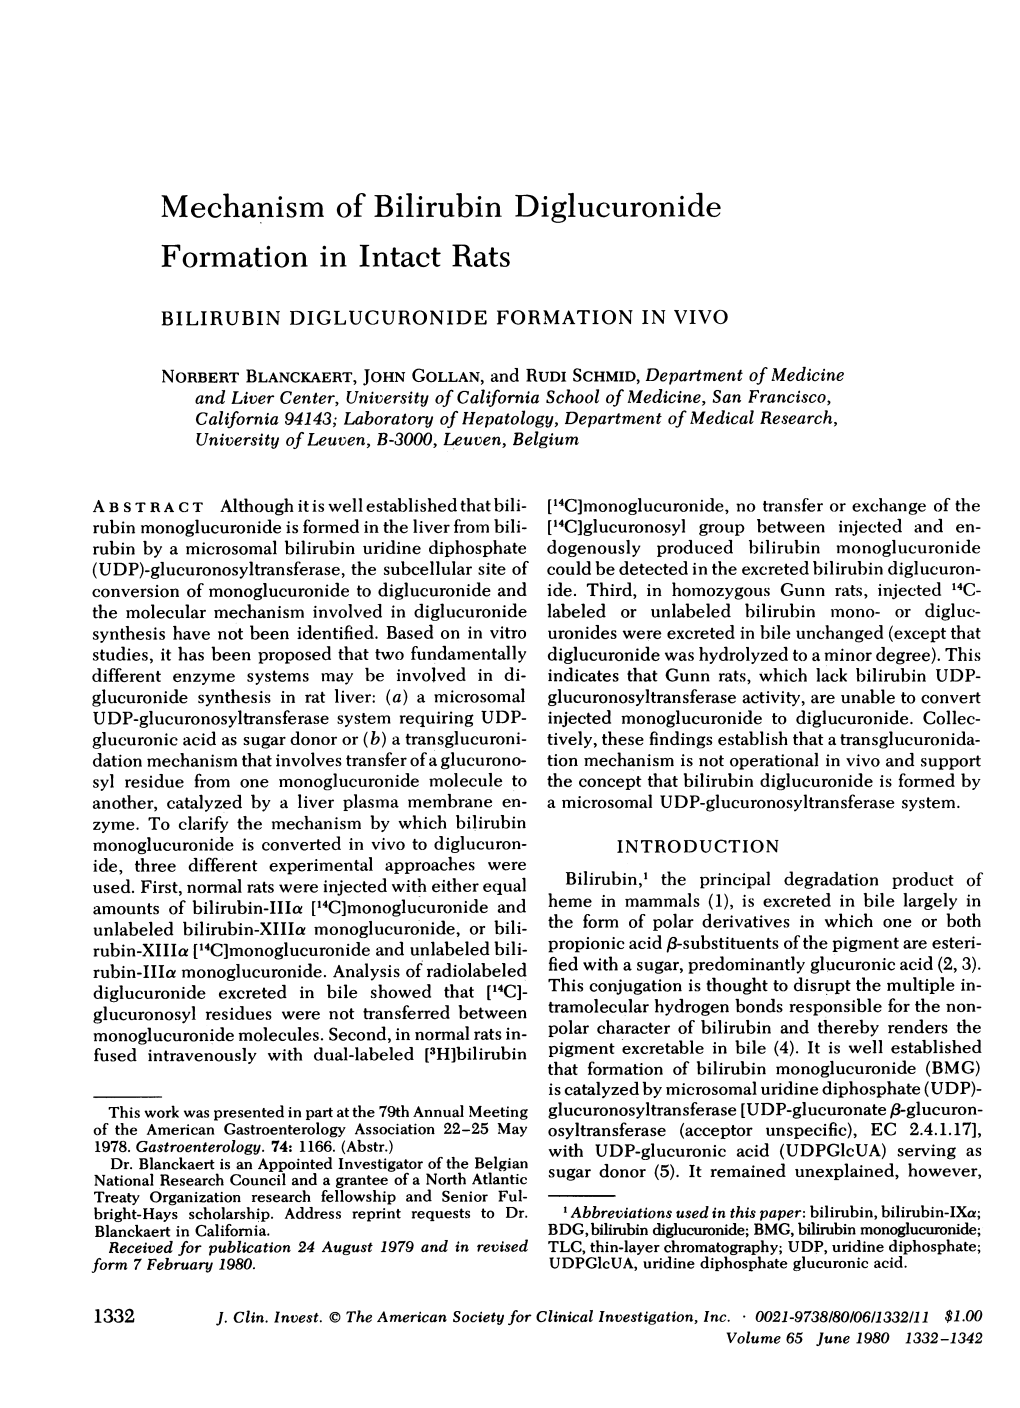 Mechanism of Bilirubin Diglucuronide Formation in Intact Rats: BILIRUBIN